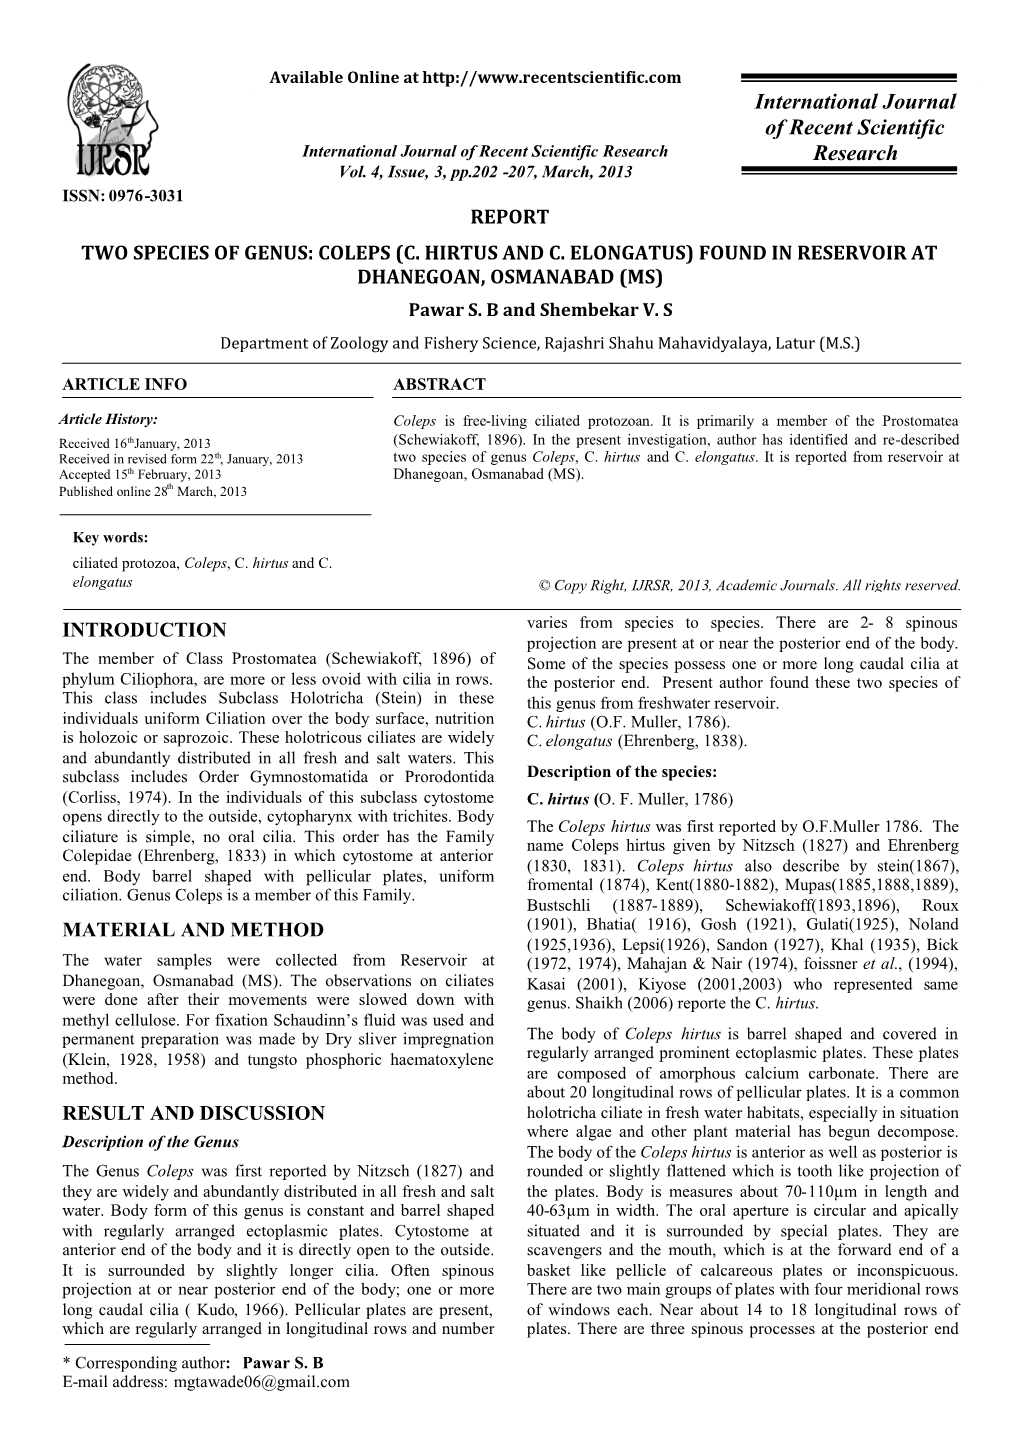 REPORT TWO SPECIES of GENUS: COLEPS (C. HIRTUS and C. ELONGATUS) FOUND in RESERVOIR at DHANEGOAN, OSMANABAD (MS) Pawar S